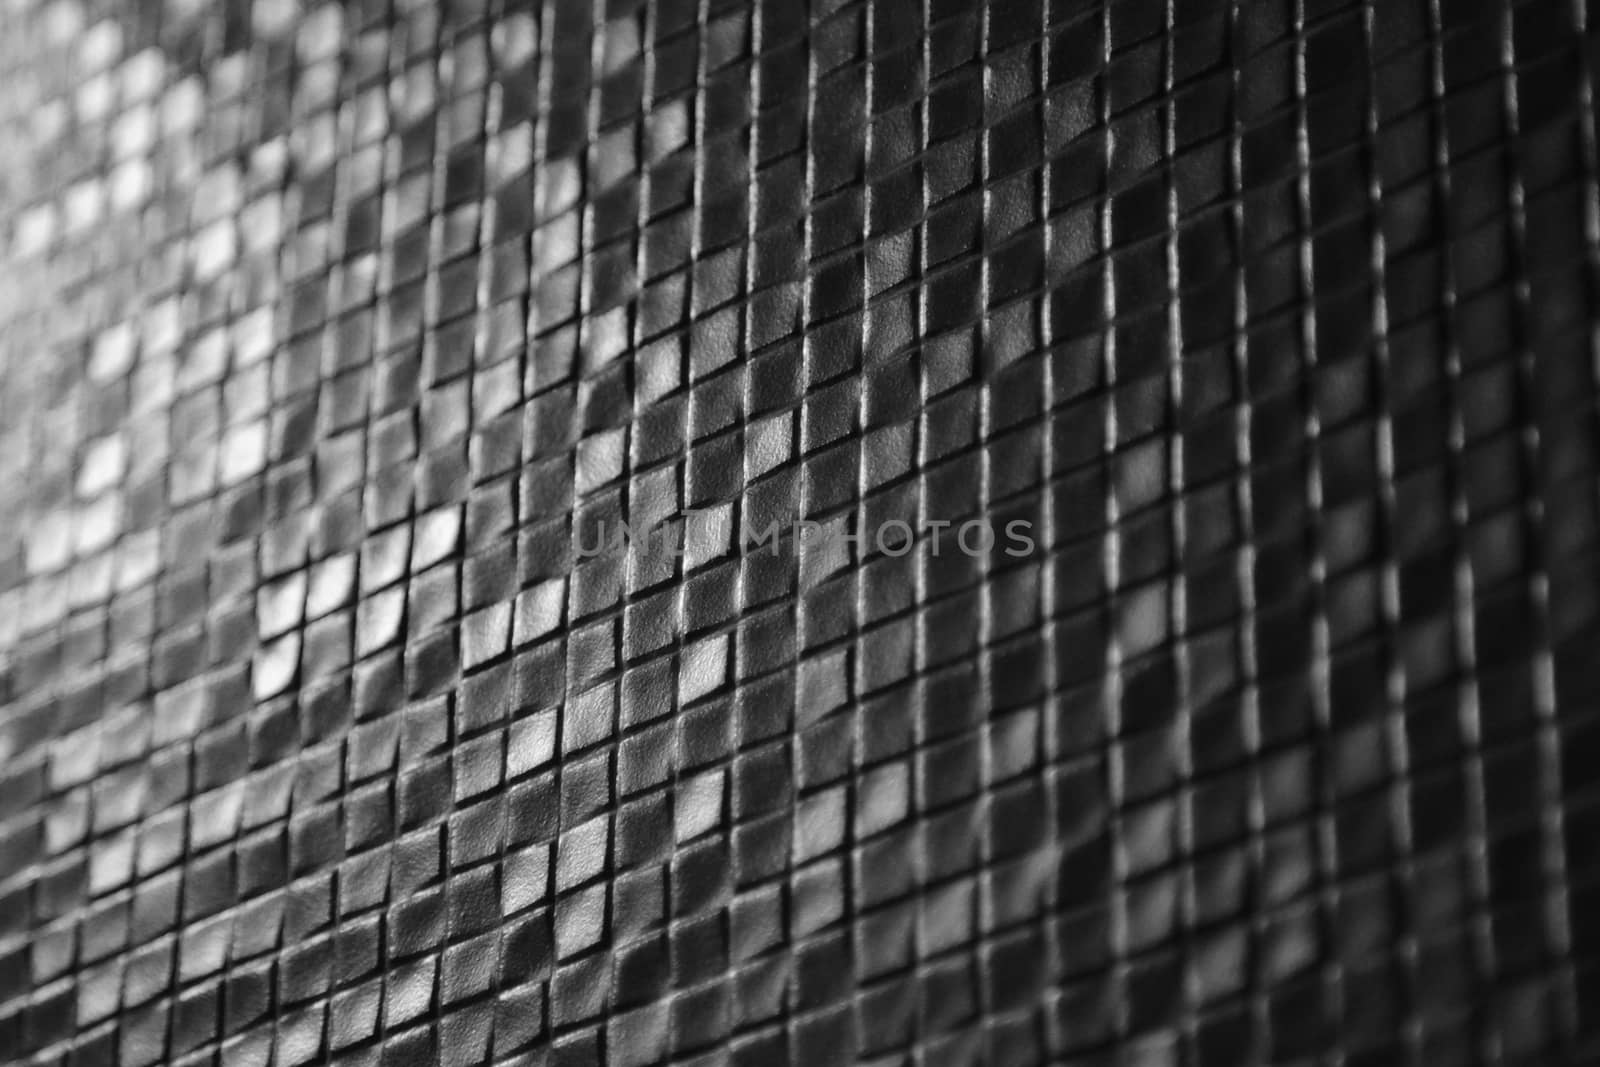 Dark tiles mosaic pattern on a wall by foto76